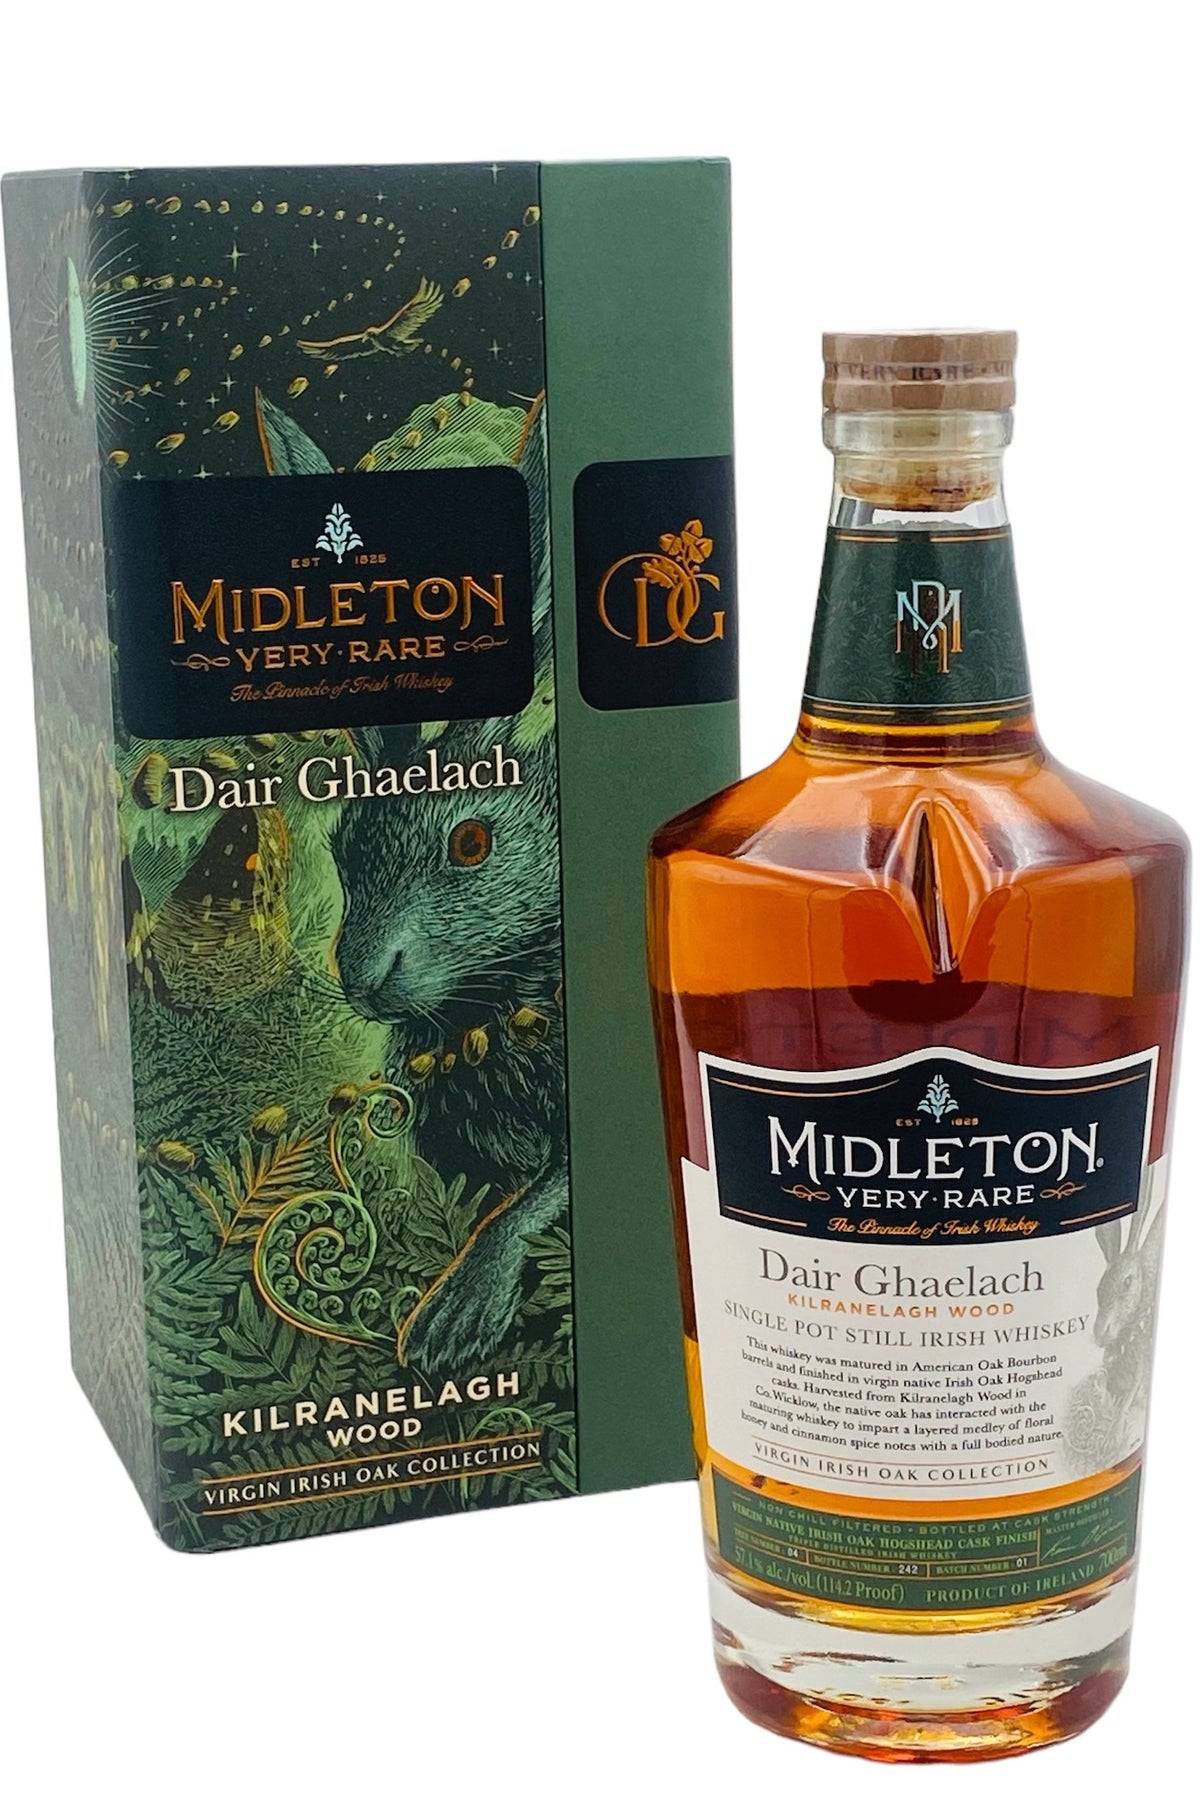 Midleton Dair Ghaelach Kilranelagh Wood Tree #4 Irish Whisky